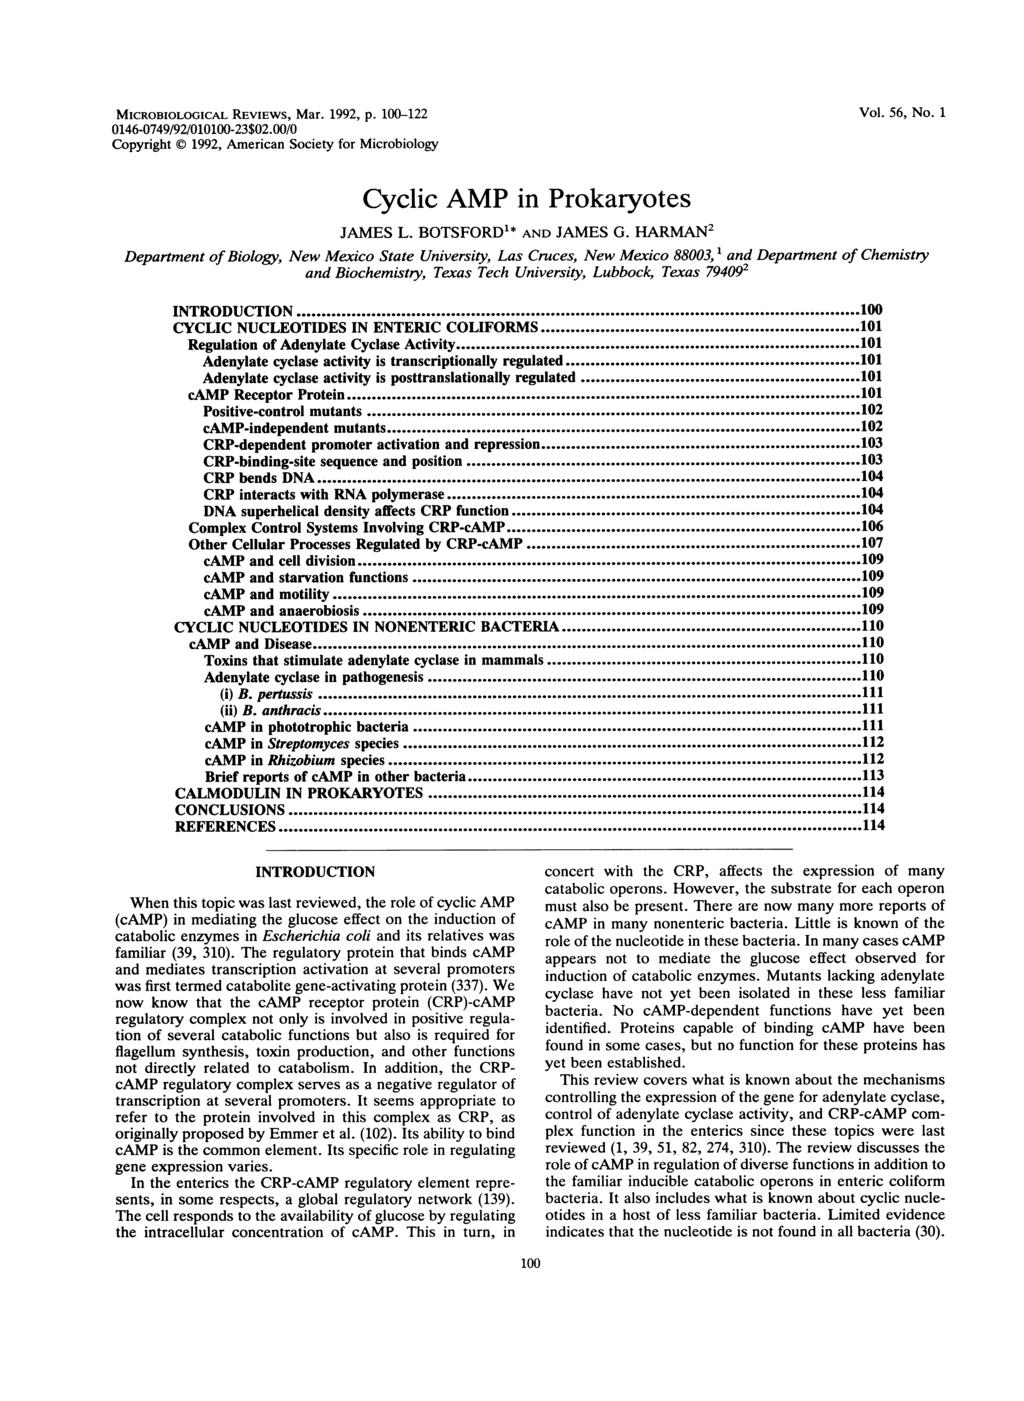 MICROBIOLOGICAL REVIEWS, Mar. 1992, p. 100-122 0146-0749/92/010100-23$02.00/0 Copyright 1992, American Society for Microbiology Vol. 56, No. 1 Cyclic AMP in Prokaryotes JAMES L. BOTSFOR'* AN JAMES G.